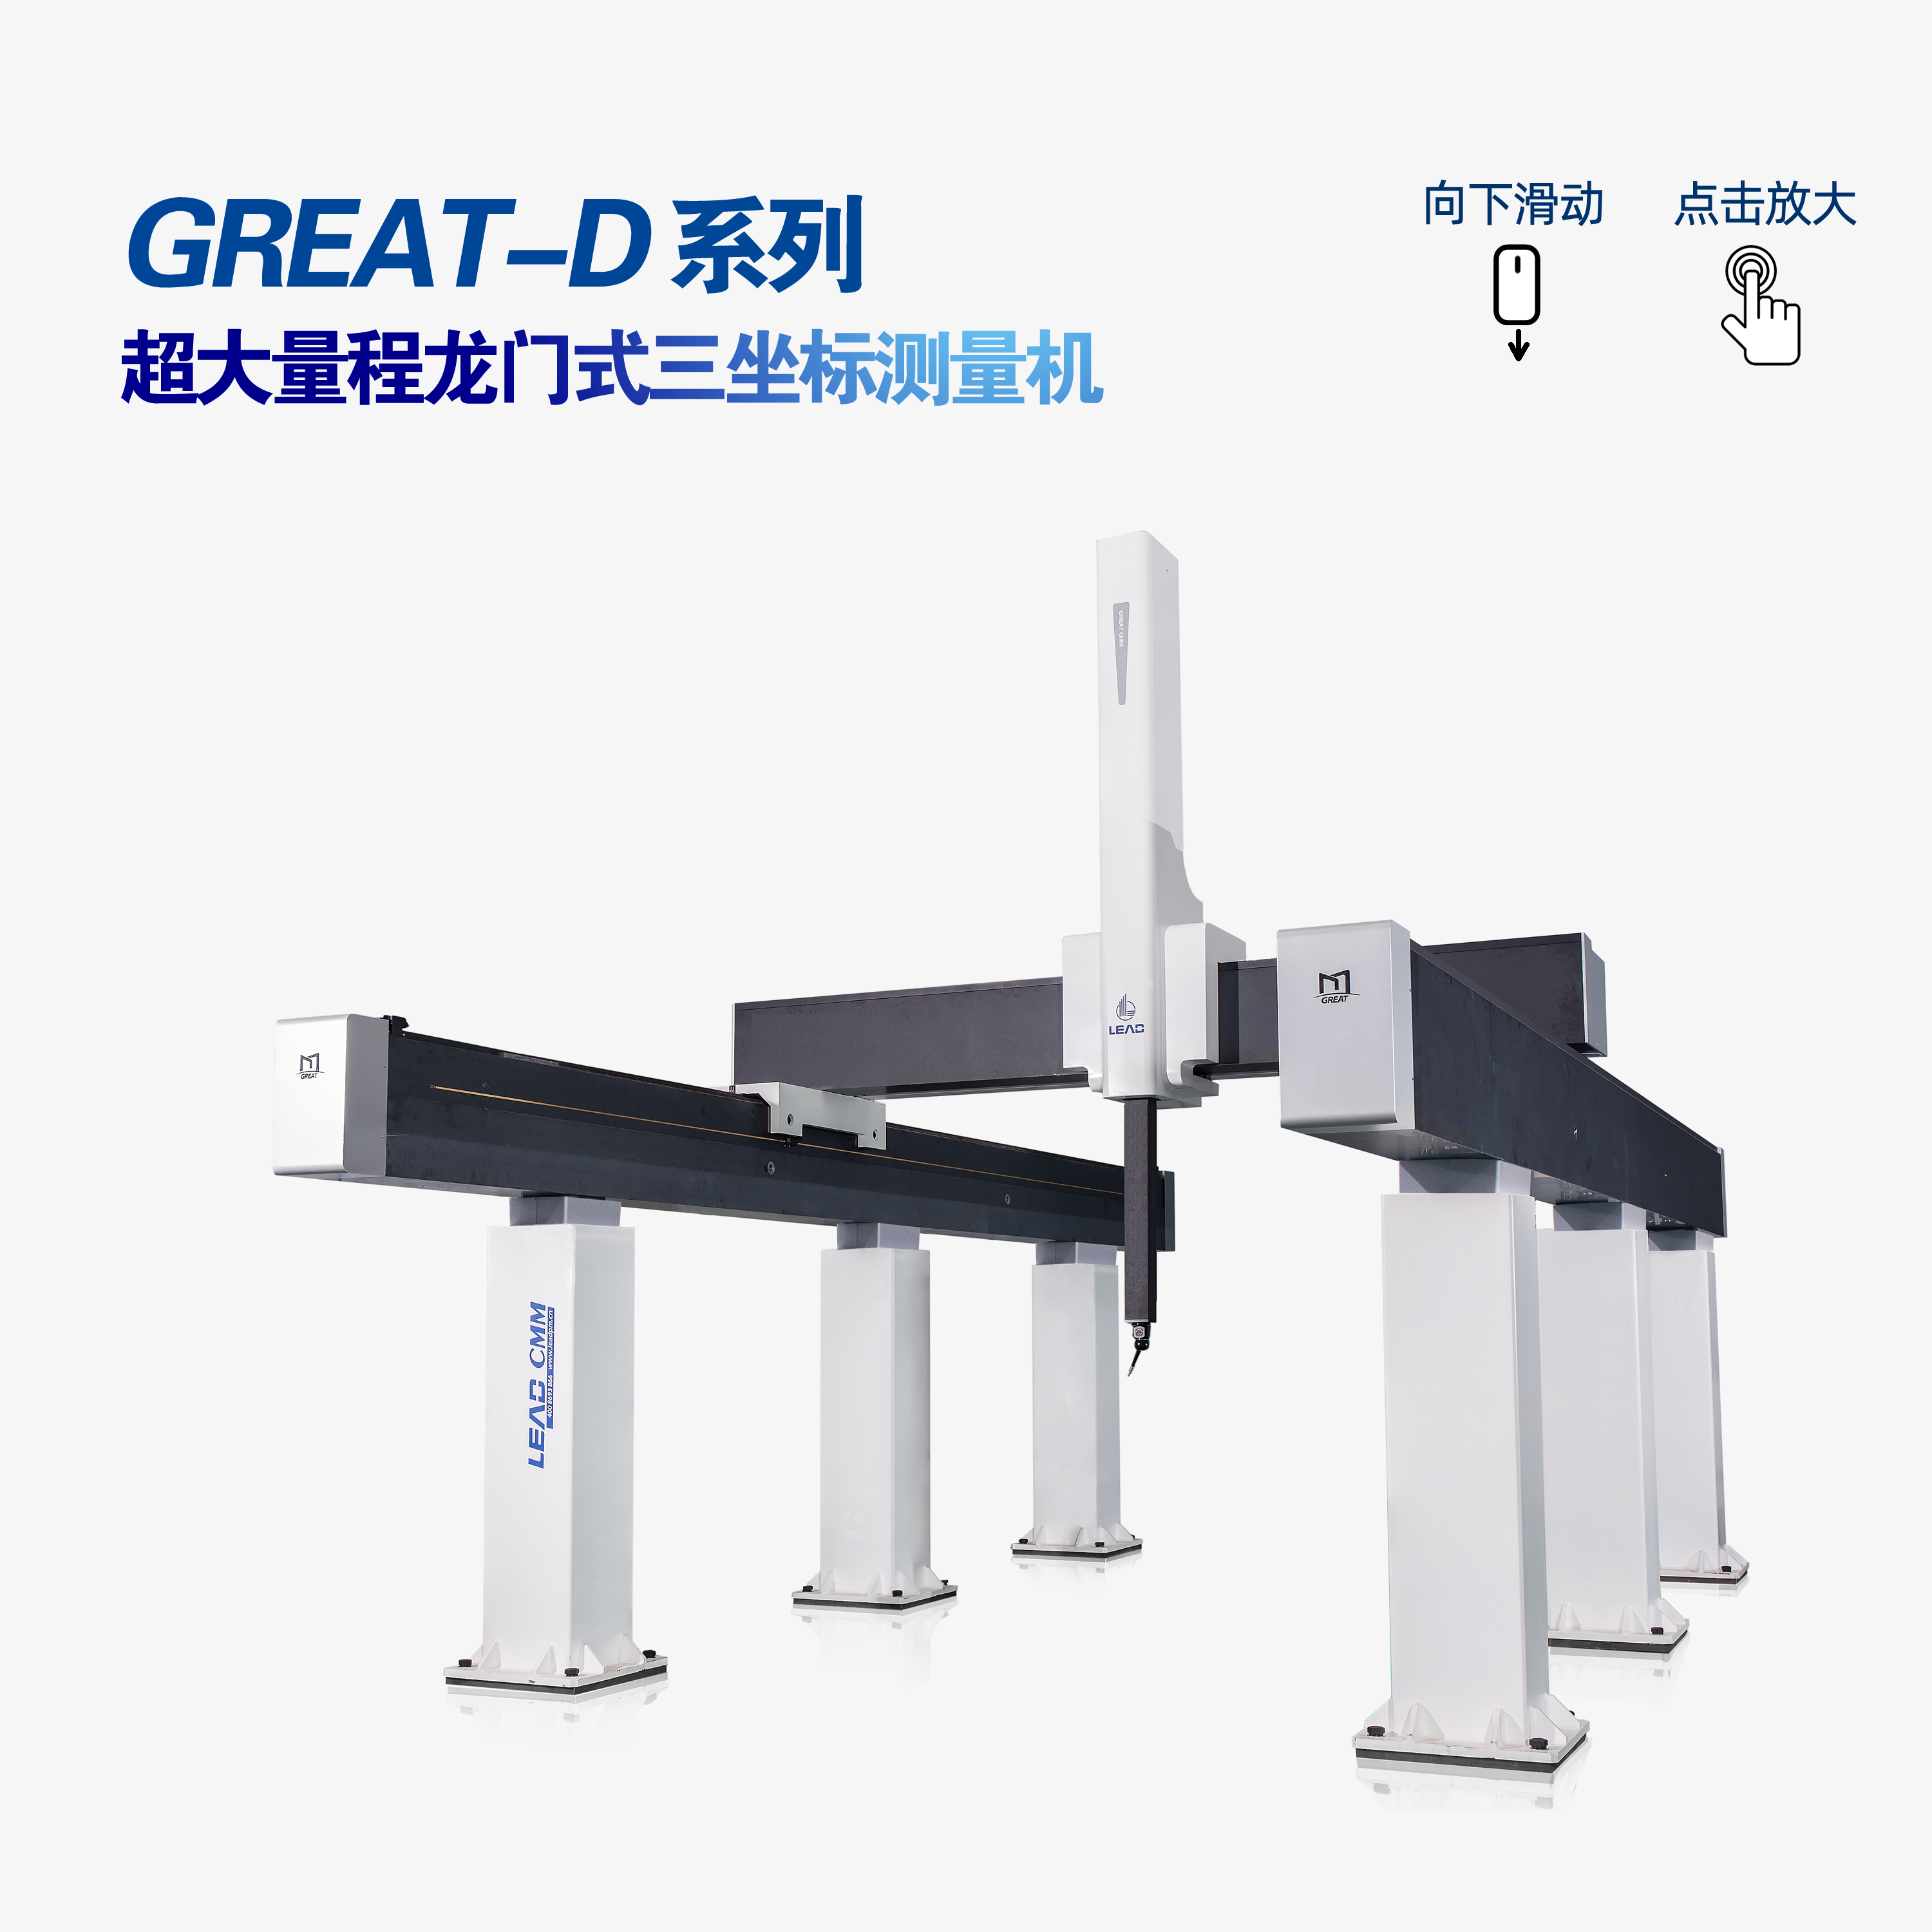 GREAT-D系列超大量程龙门式三坐标测量机